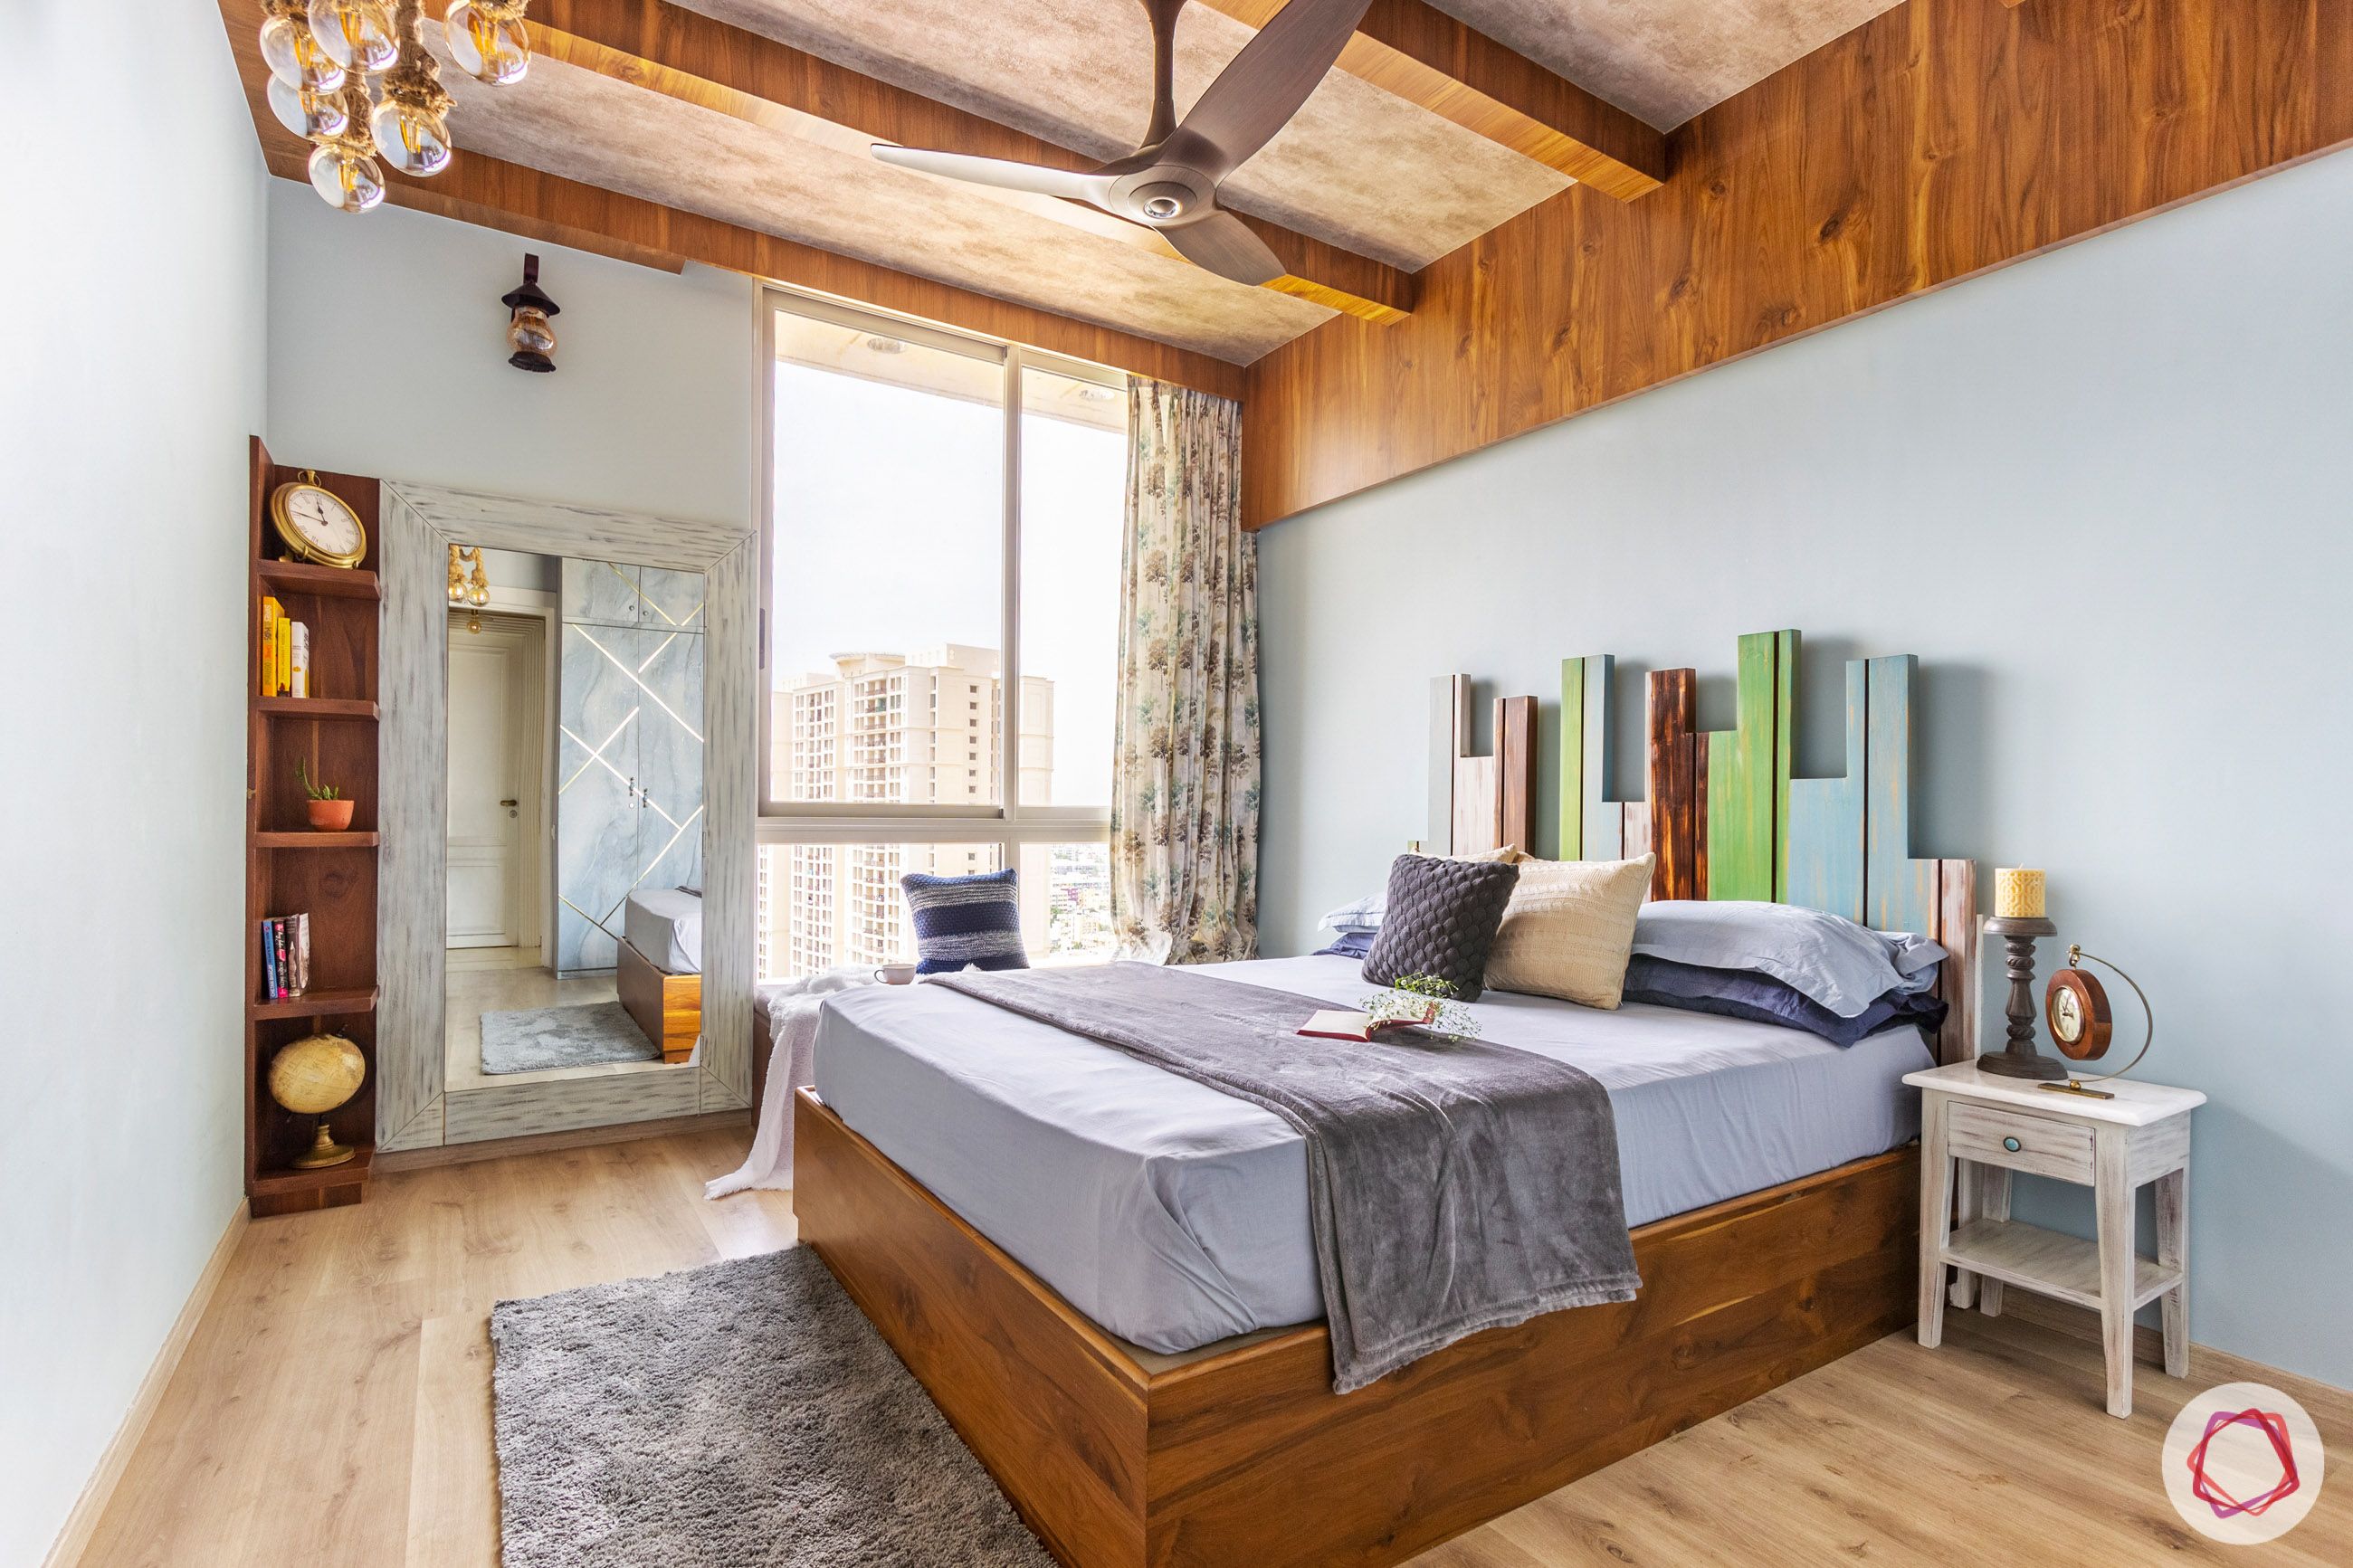 modern bedroom designs-wooden rafters-edgy headboard-wooden flooring